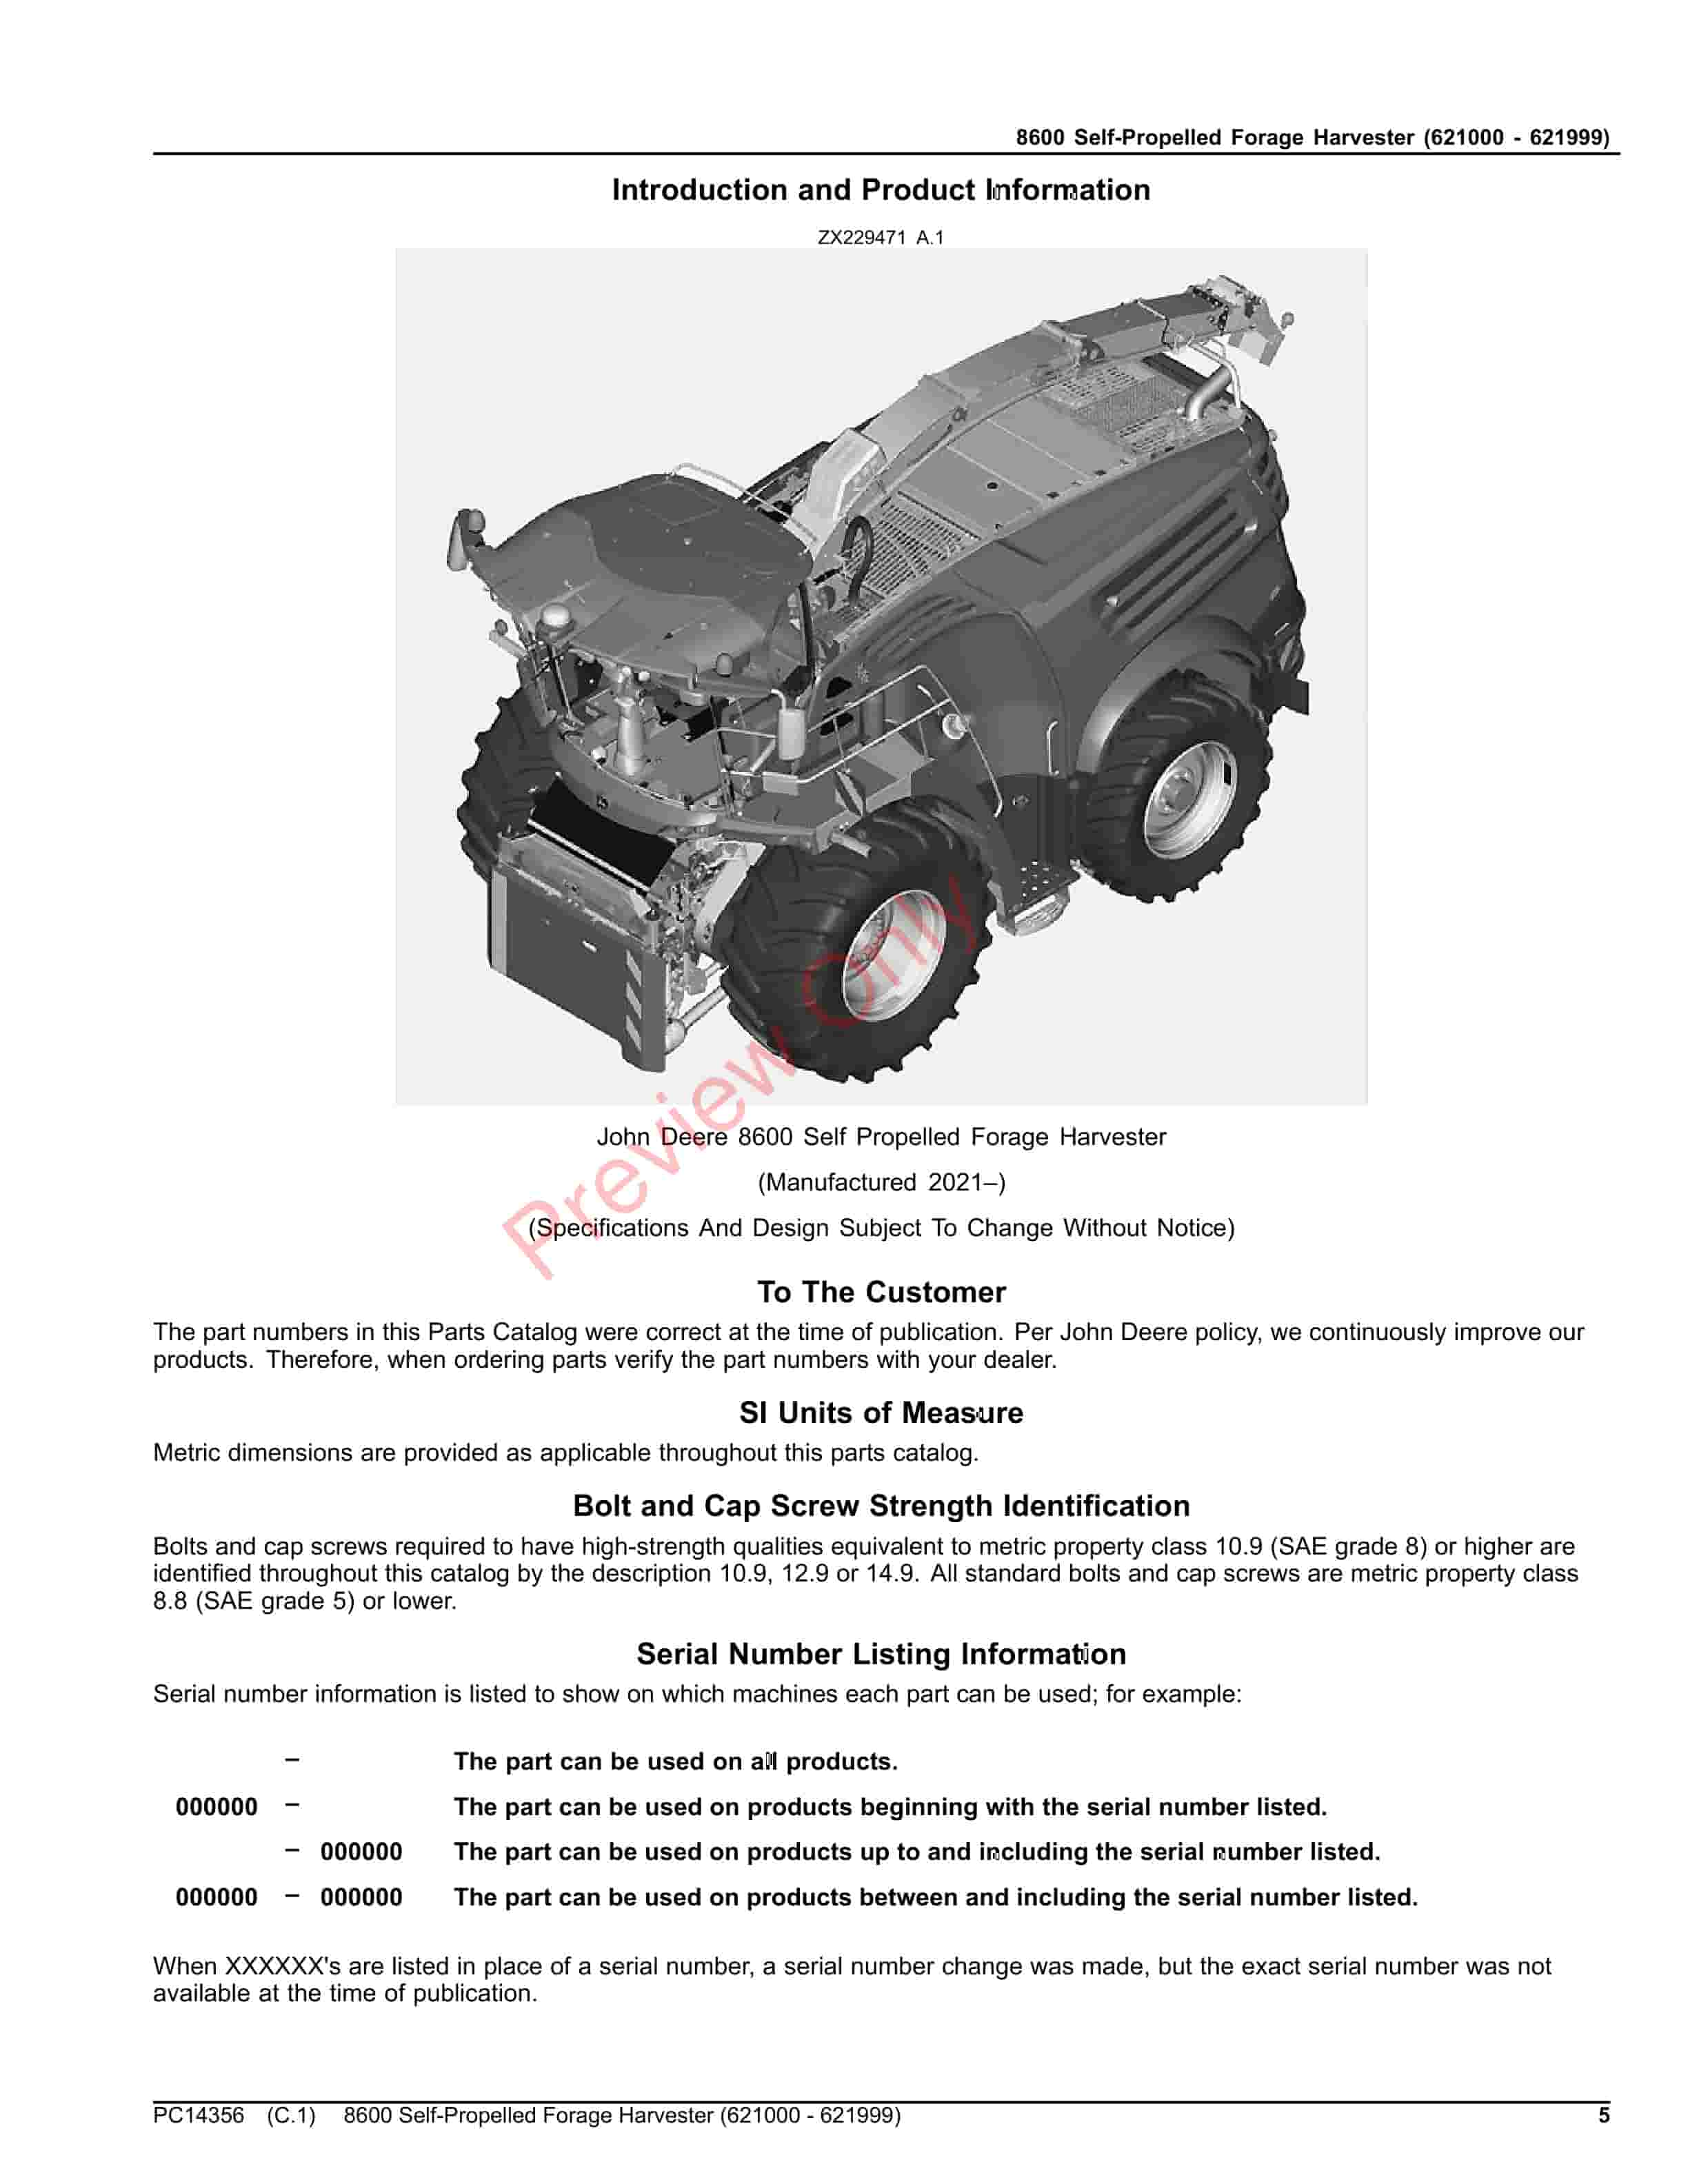 John Deere 8600 Self-Propelled Forage Harvester (621000 &#8211; 621999) Parts Catalog PC14356 15OCT23-5